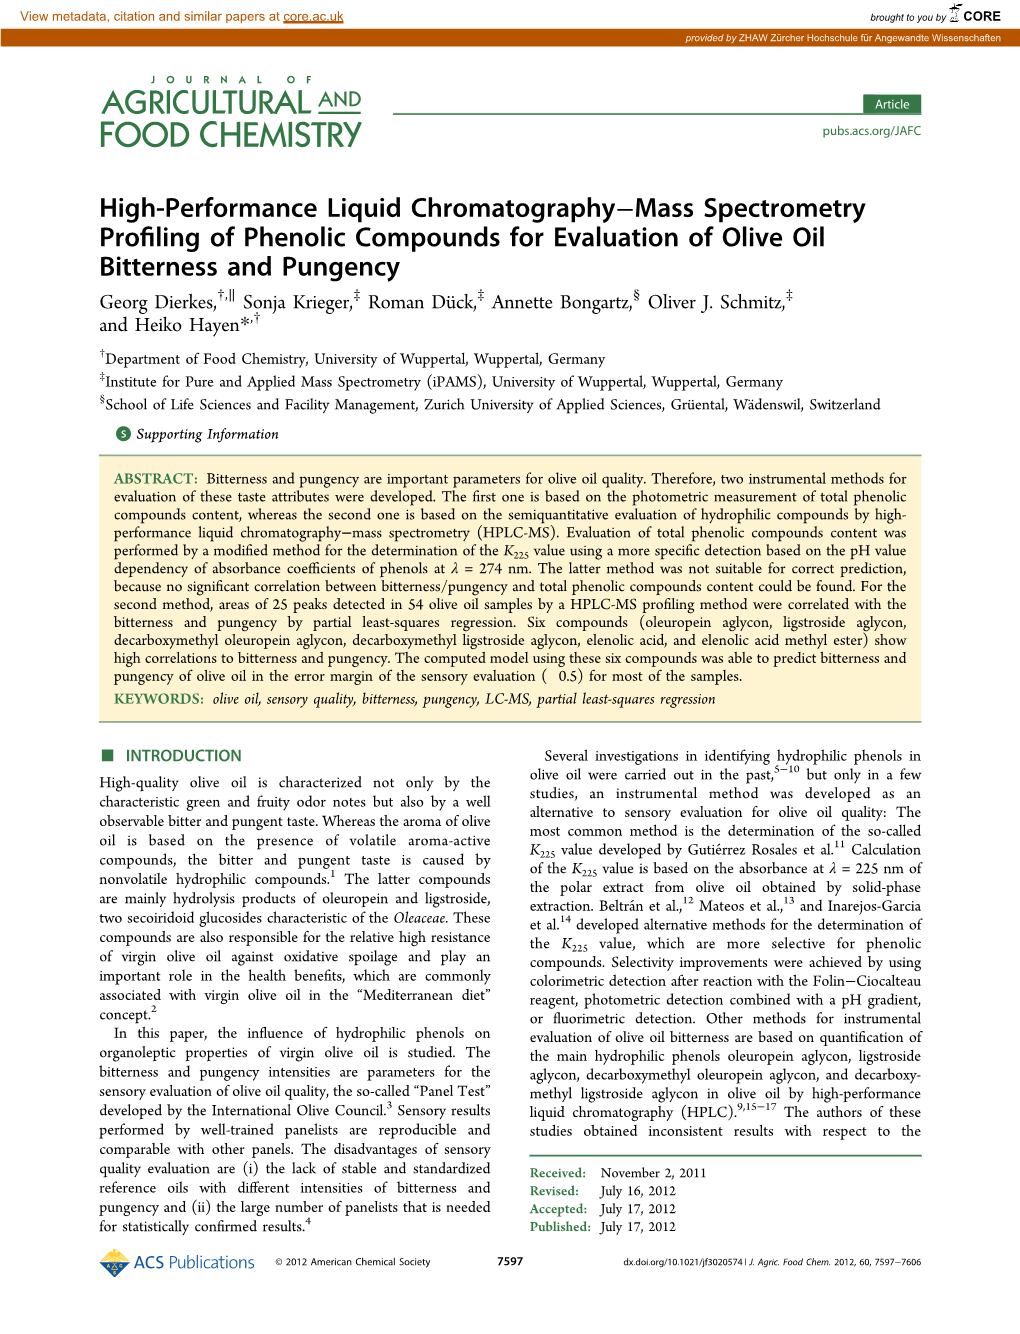 High-Performance Liquid Chromatography−Mass